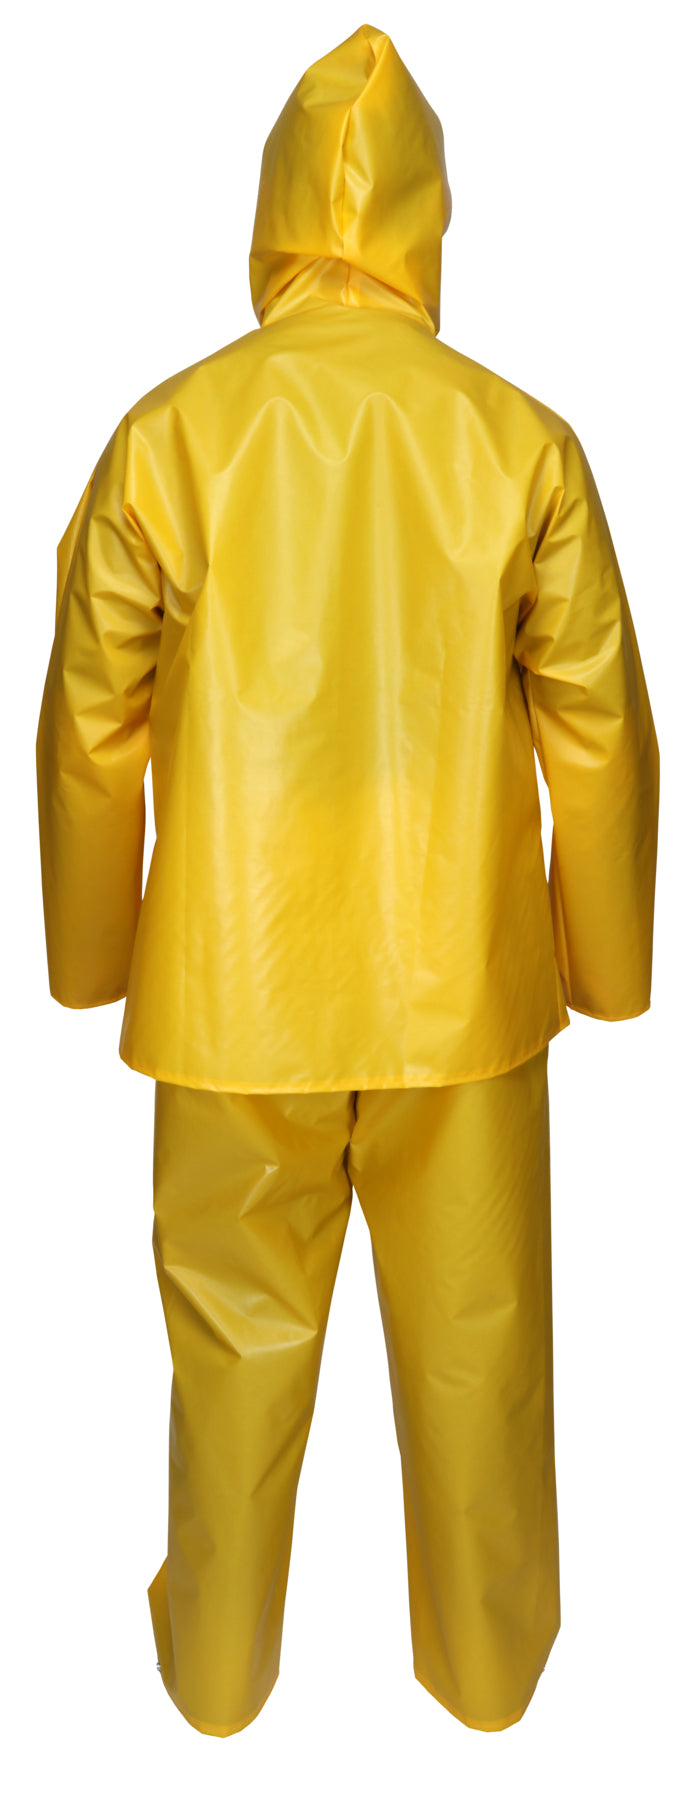 560JH - Navigator Series Rain Jacket w/Attached Hood Yellow